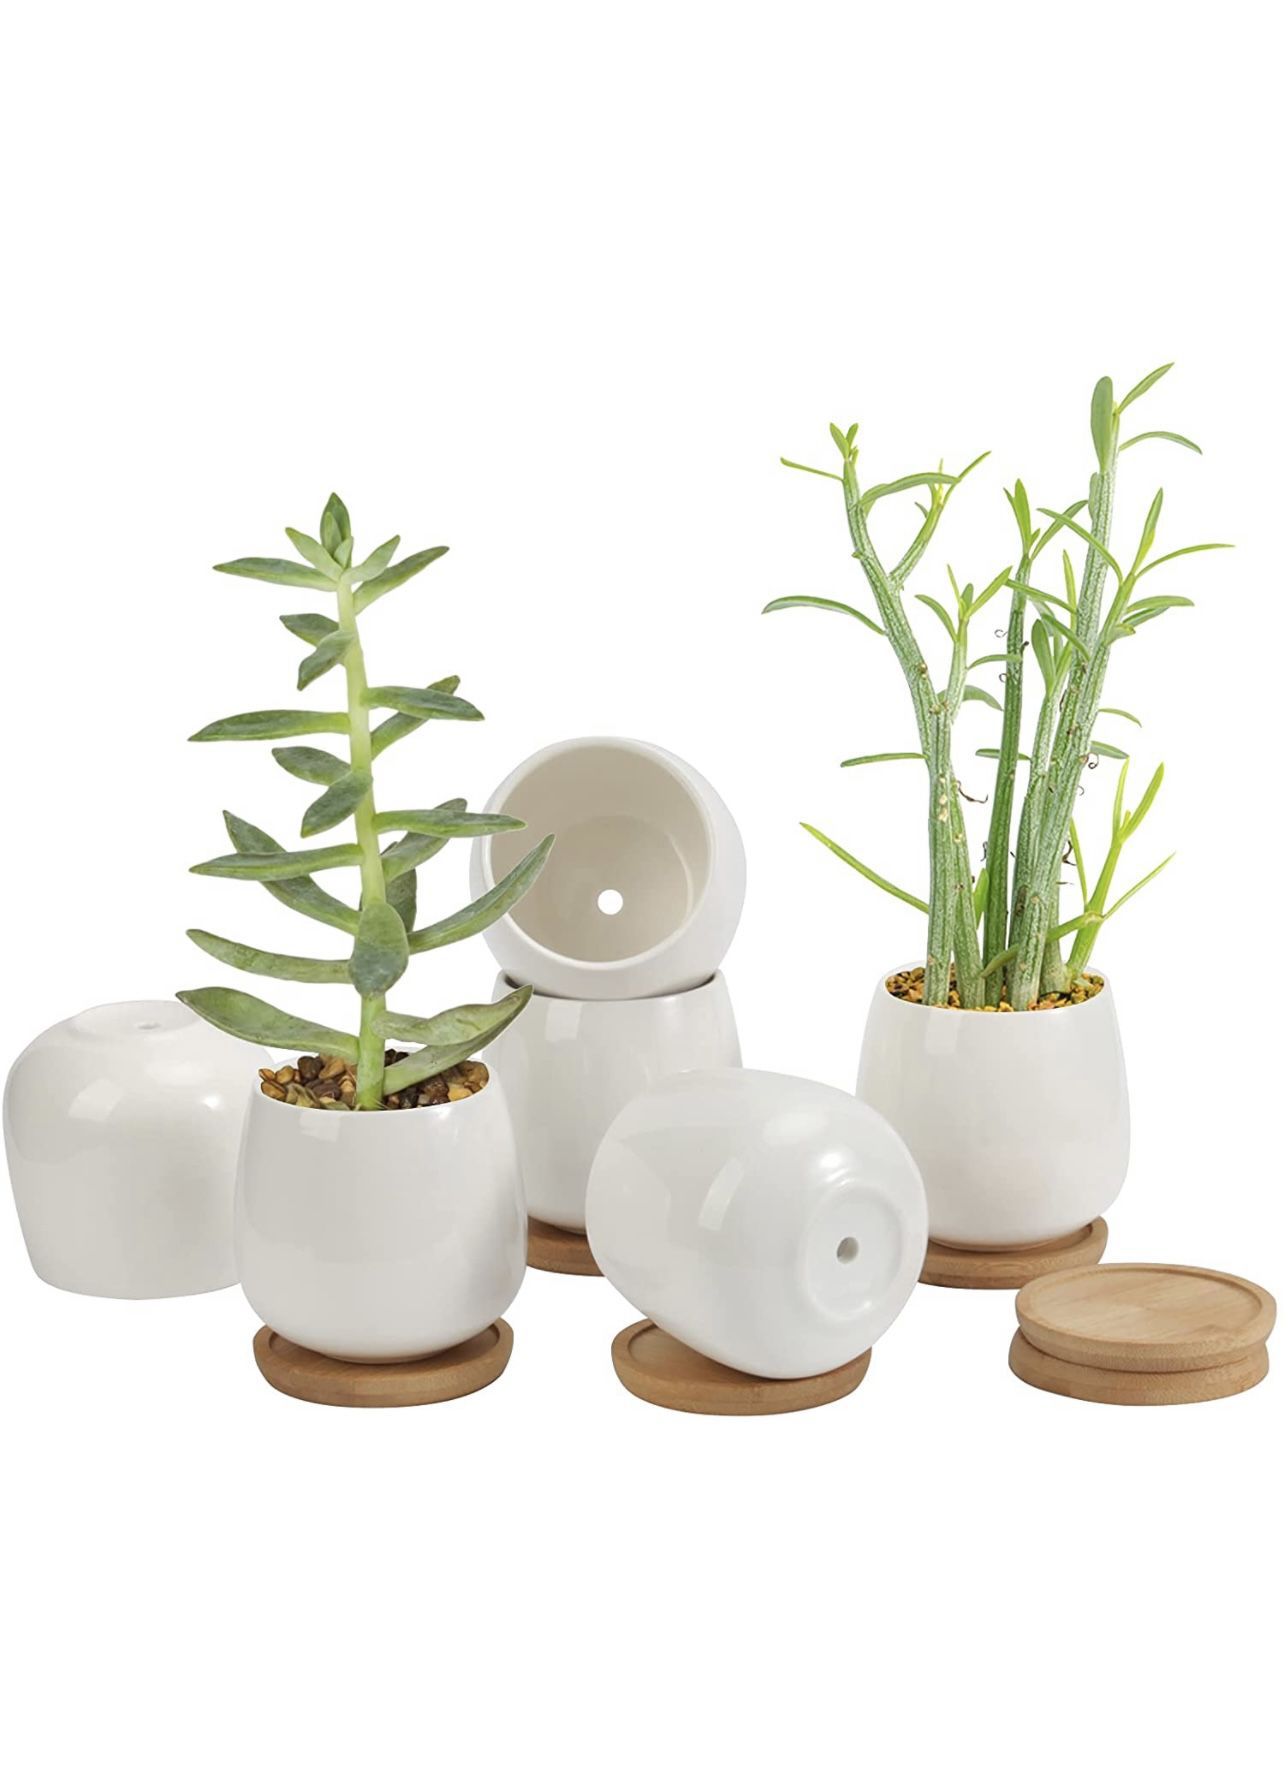 Ceramic Pots For Plants 